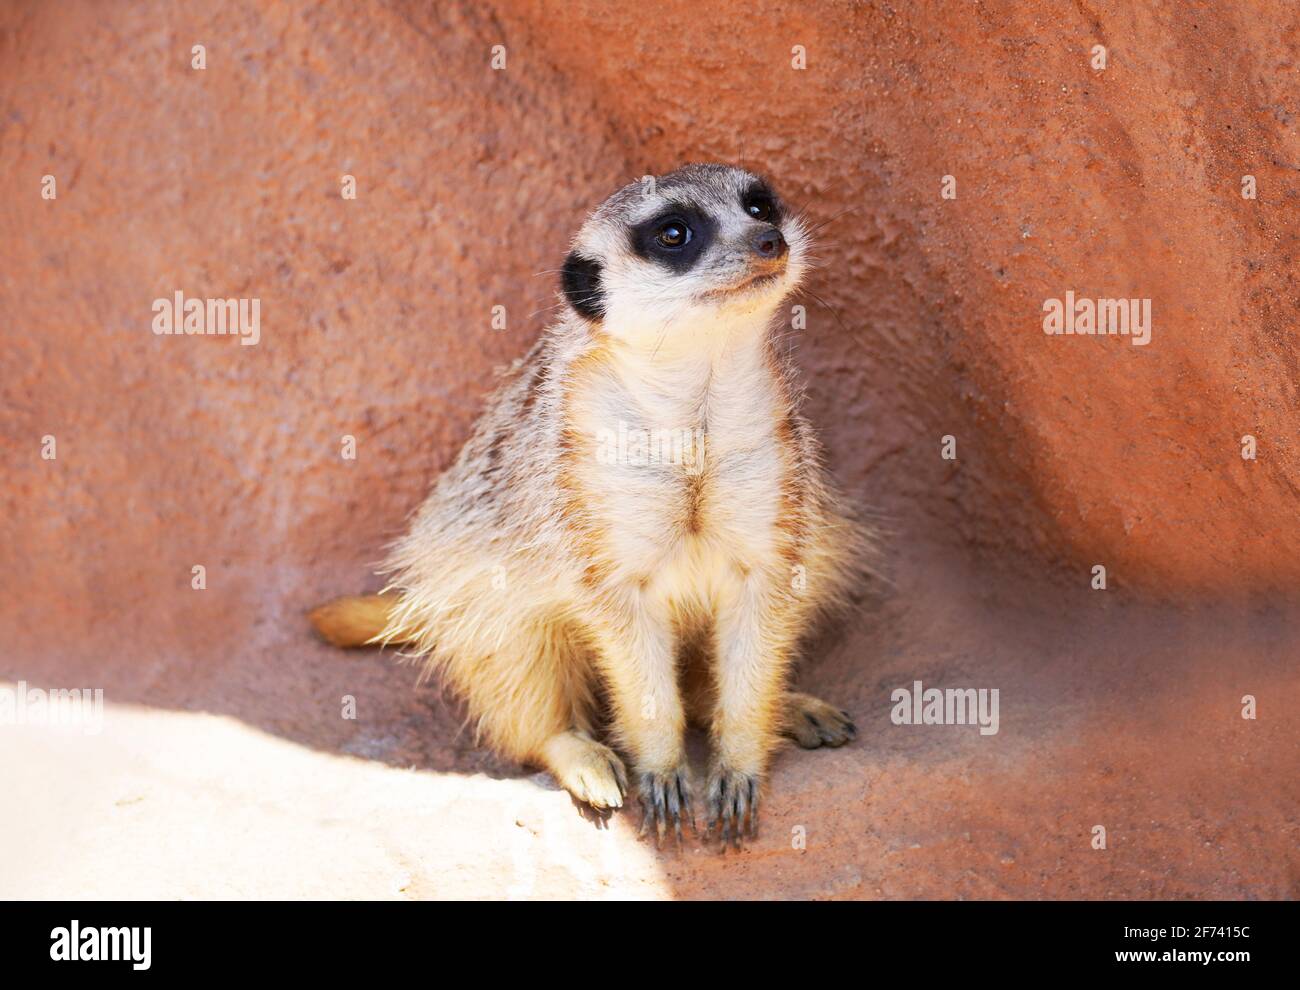 Portrait of a meerkat. Suricata suricatta. Animal looks around vigilantly and keeps watch. Mammal with brown fur. Mongoose family. Stock Photo